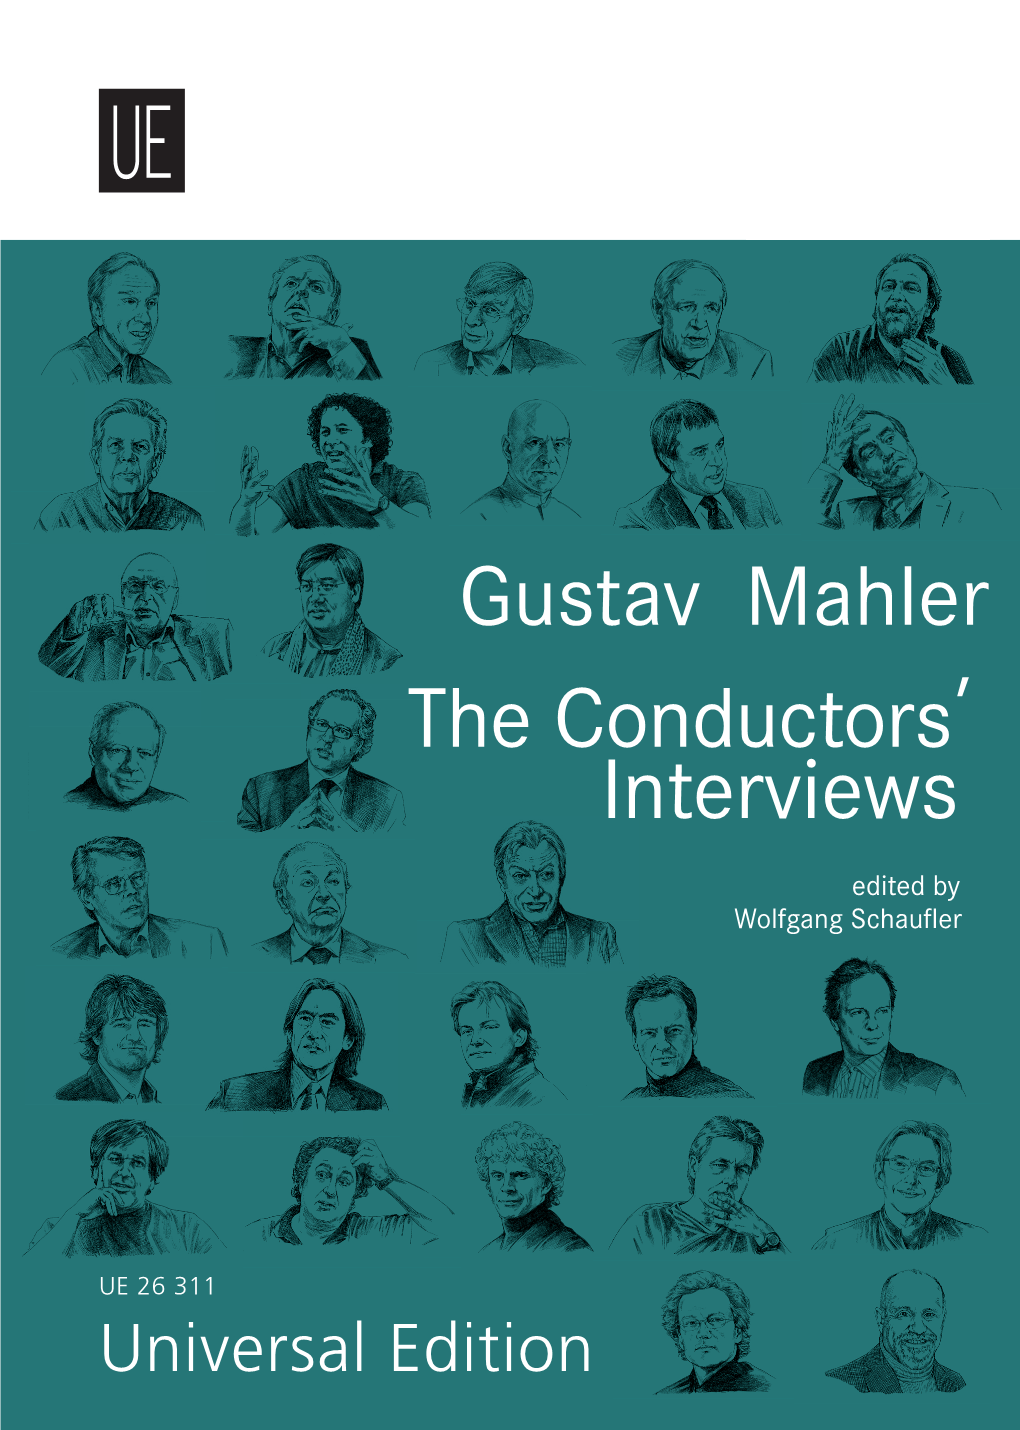 Gustav Mahler the Conductors' Interviews